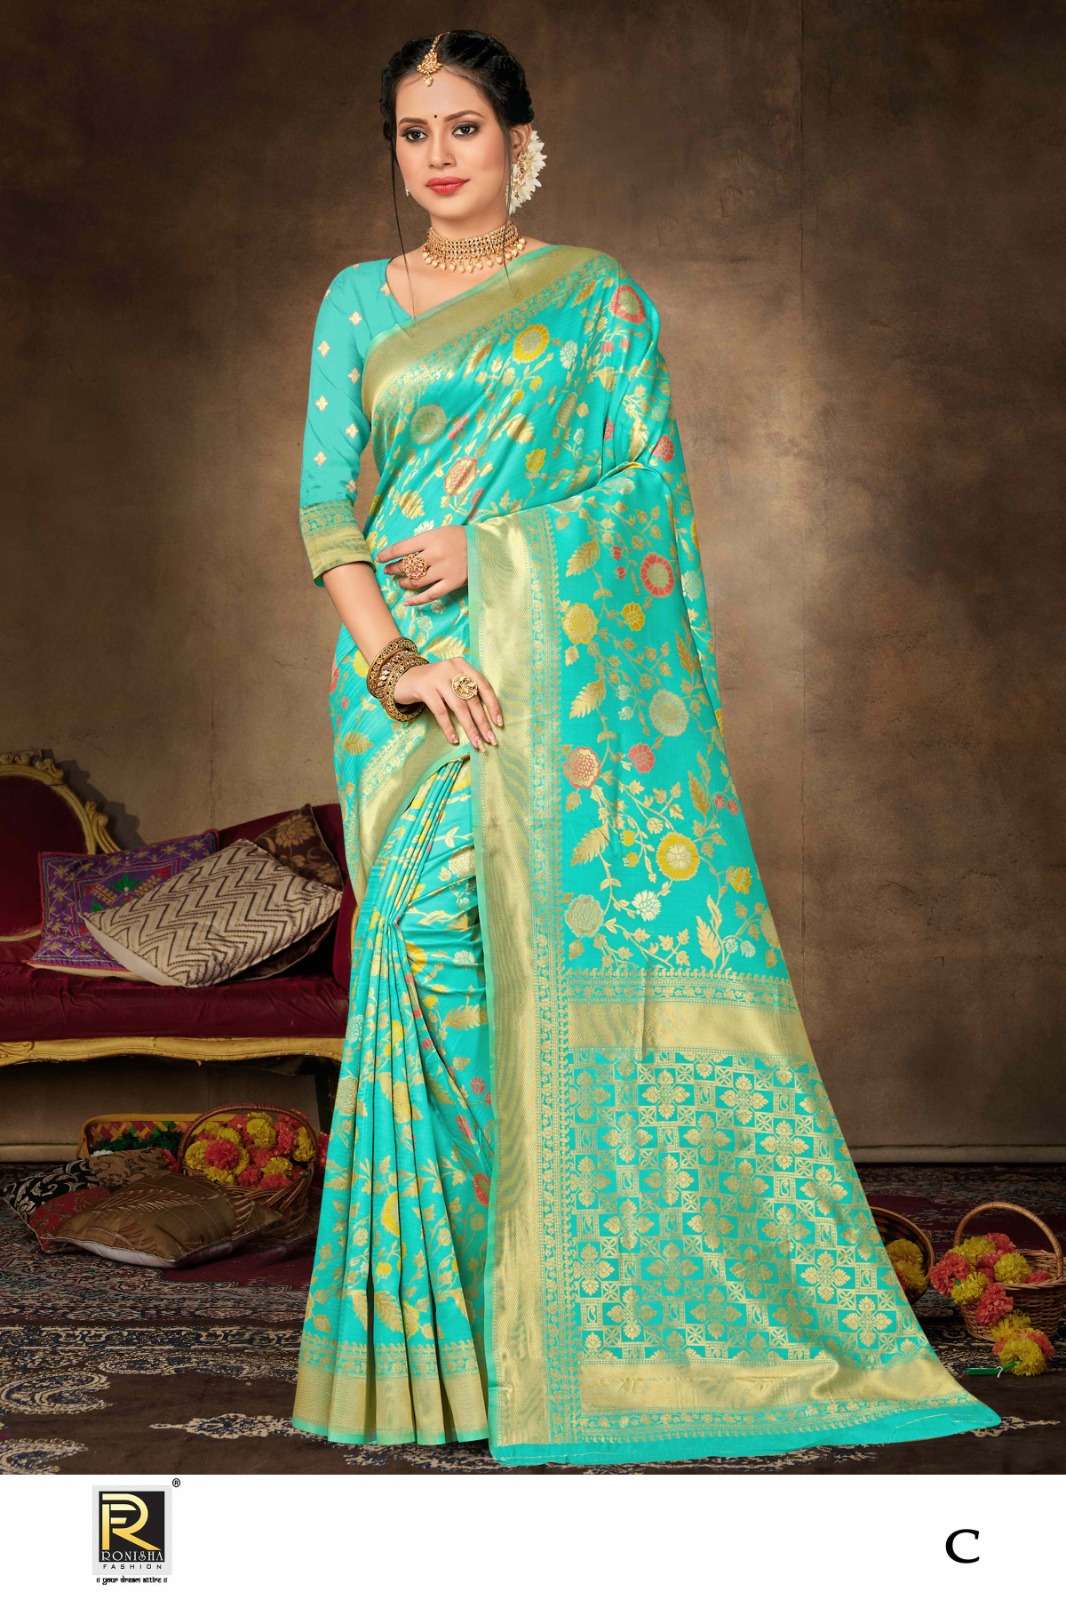 Ronisha Shashi Premium Fancy Silk Saree Wholesale catalog